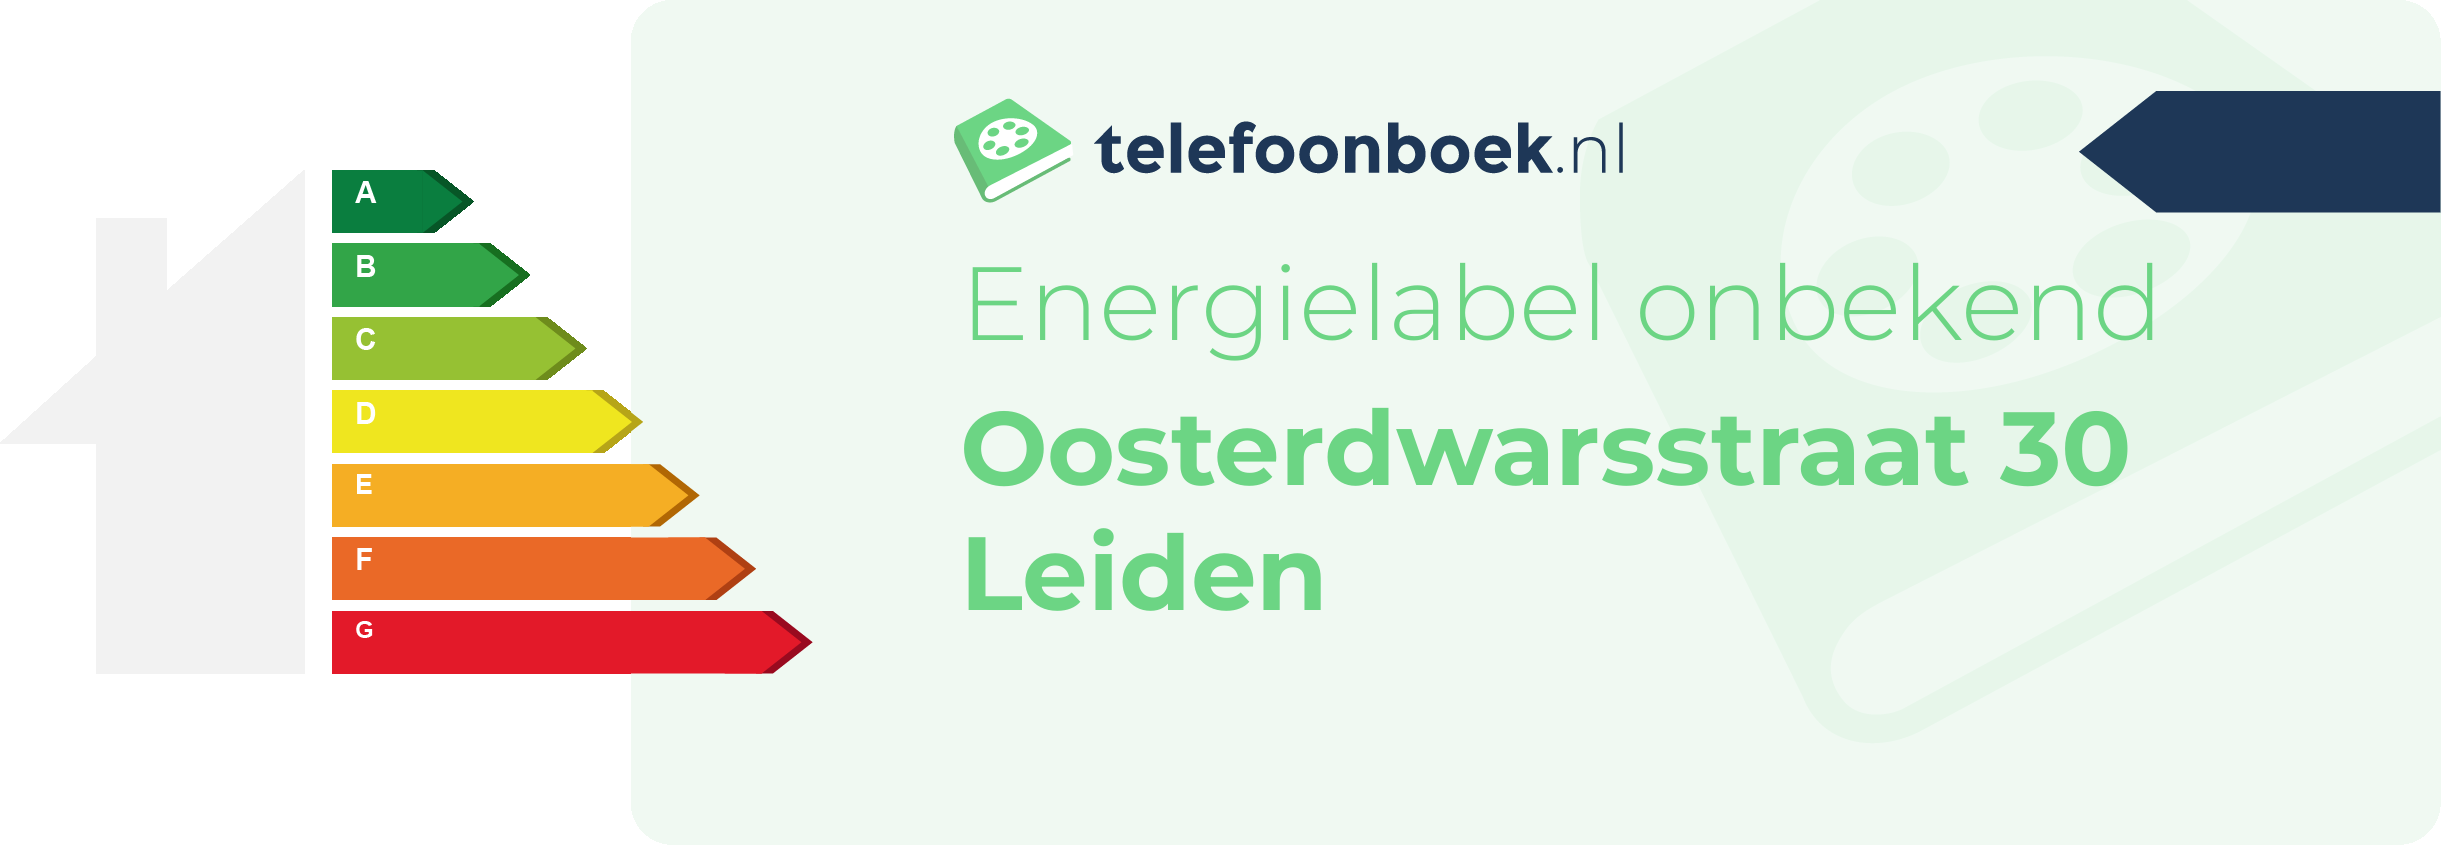 Energielabel Oosterdwarsstraat 30 Leiden